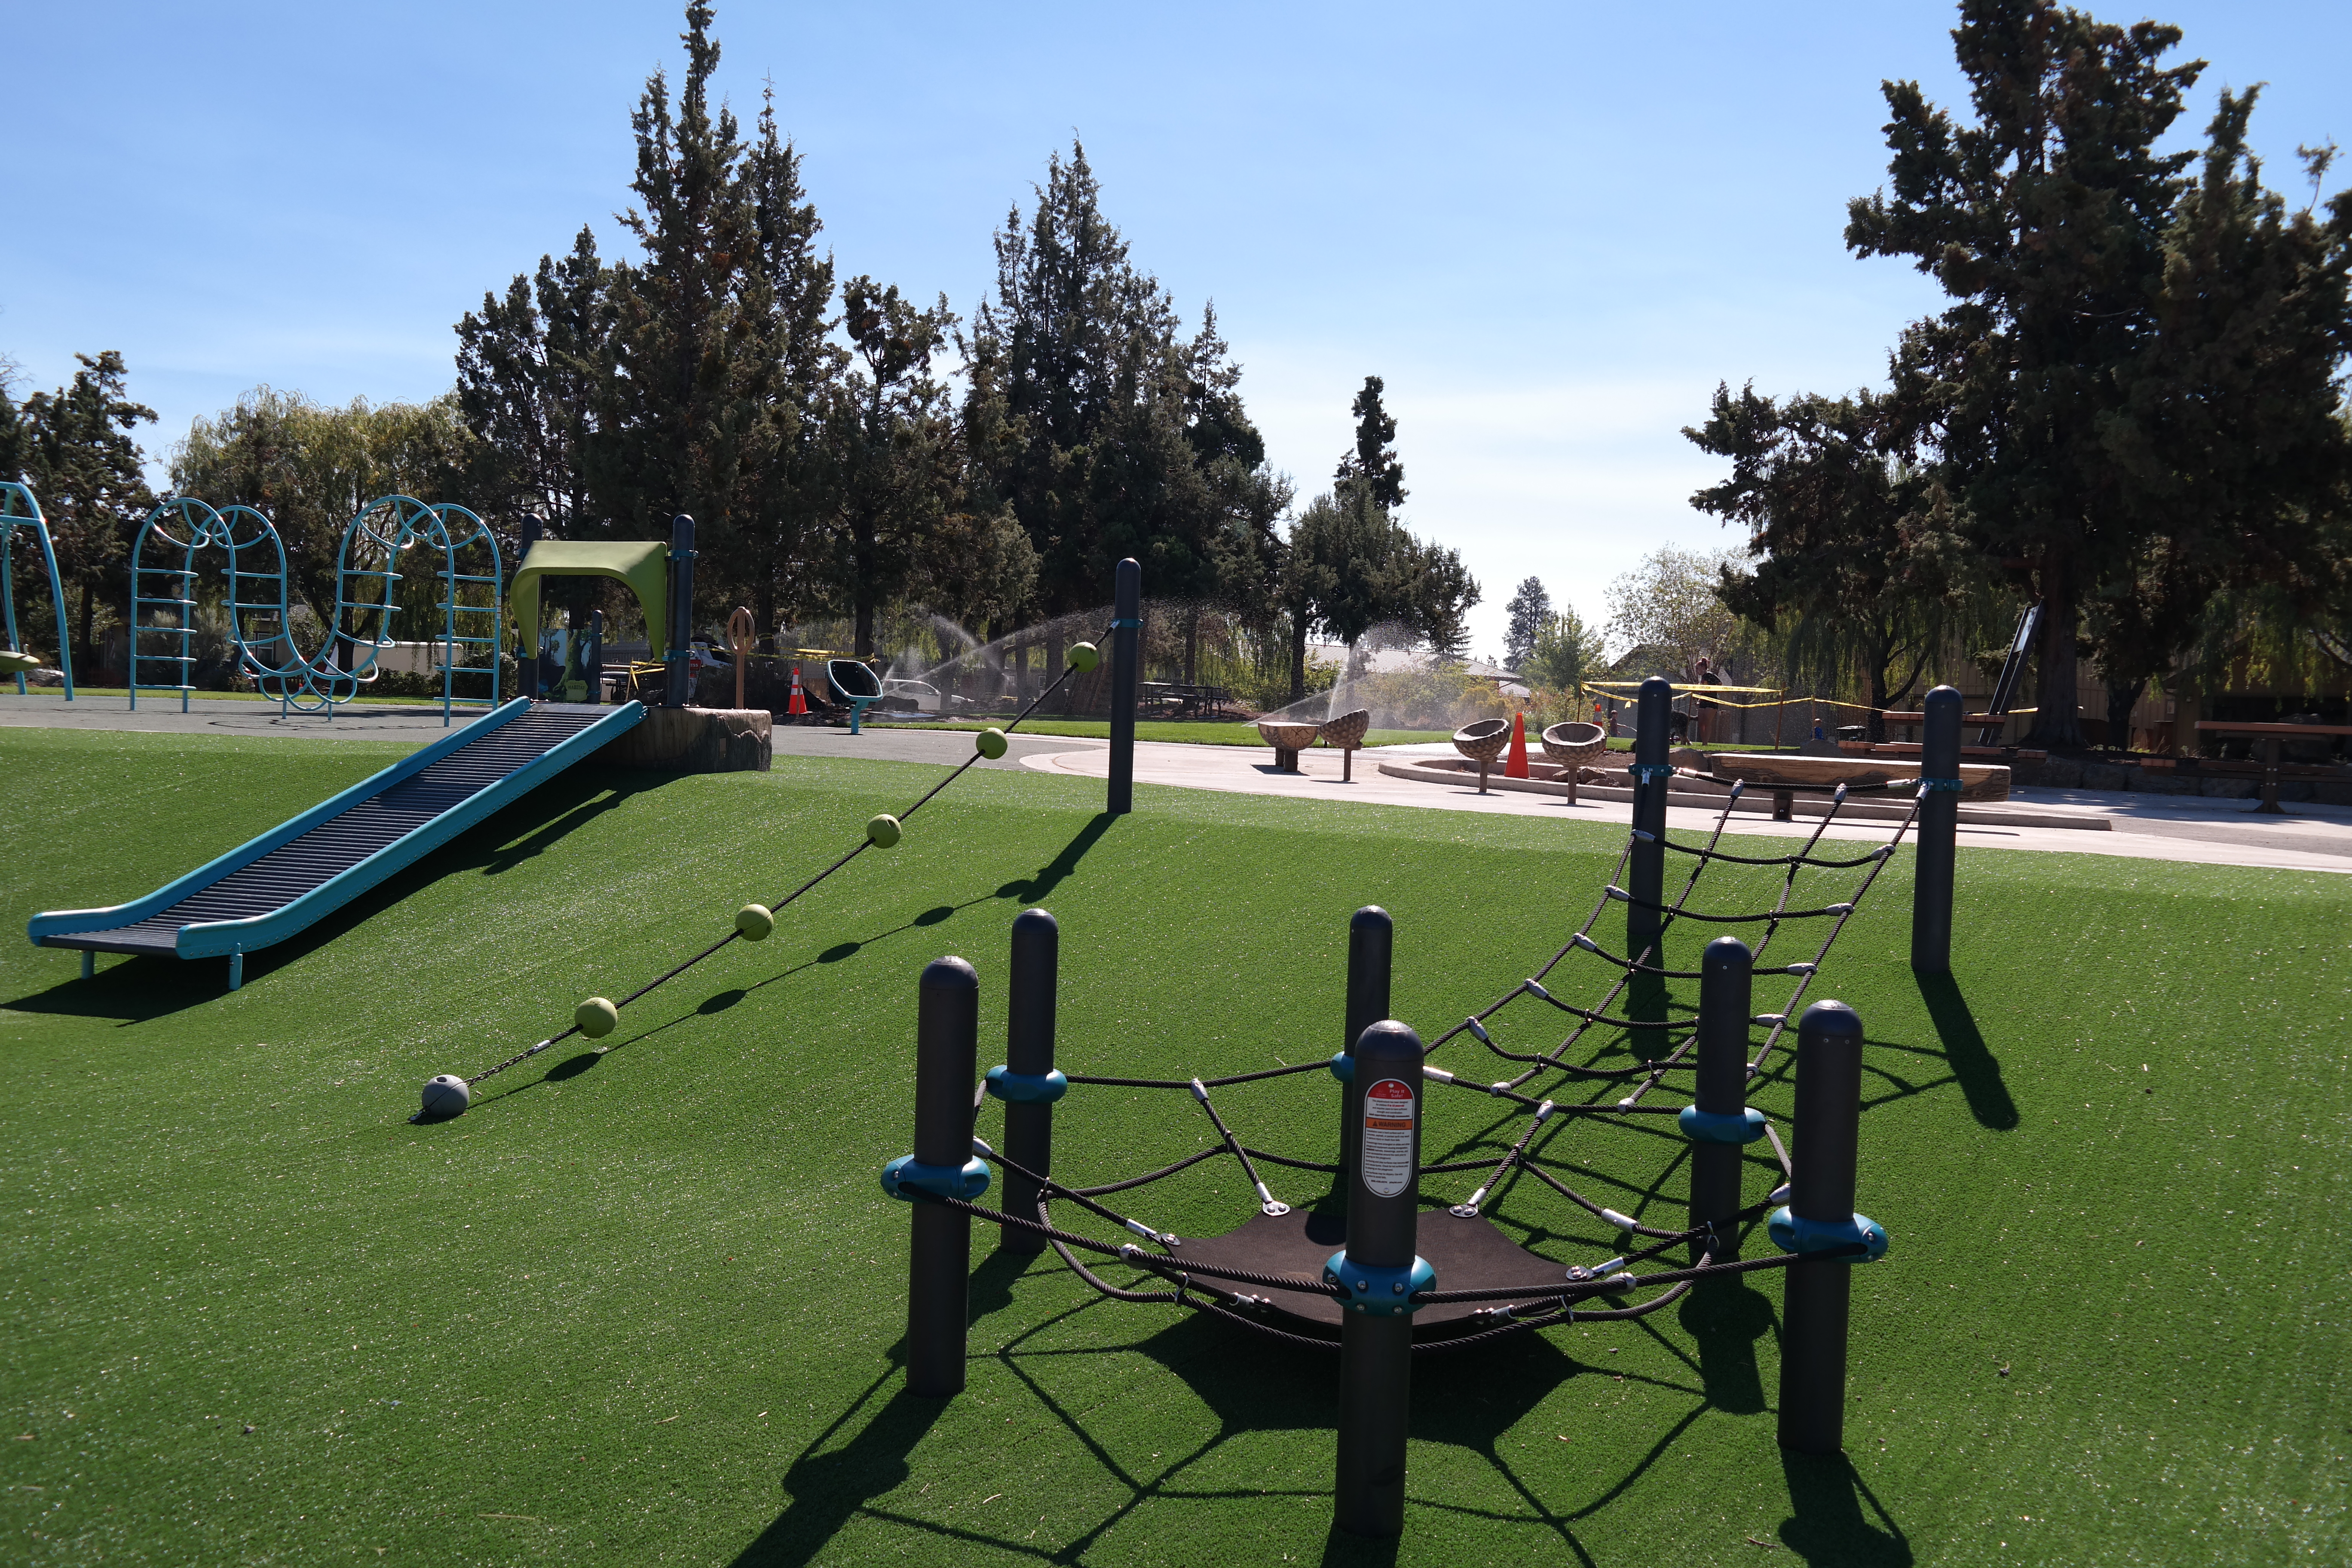 playground equipment at Empire Crossing park